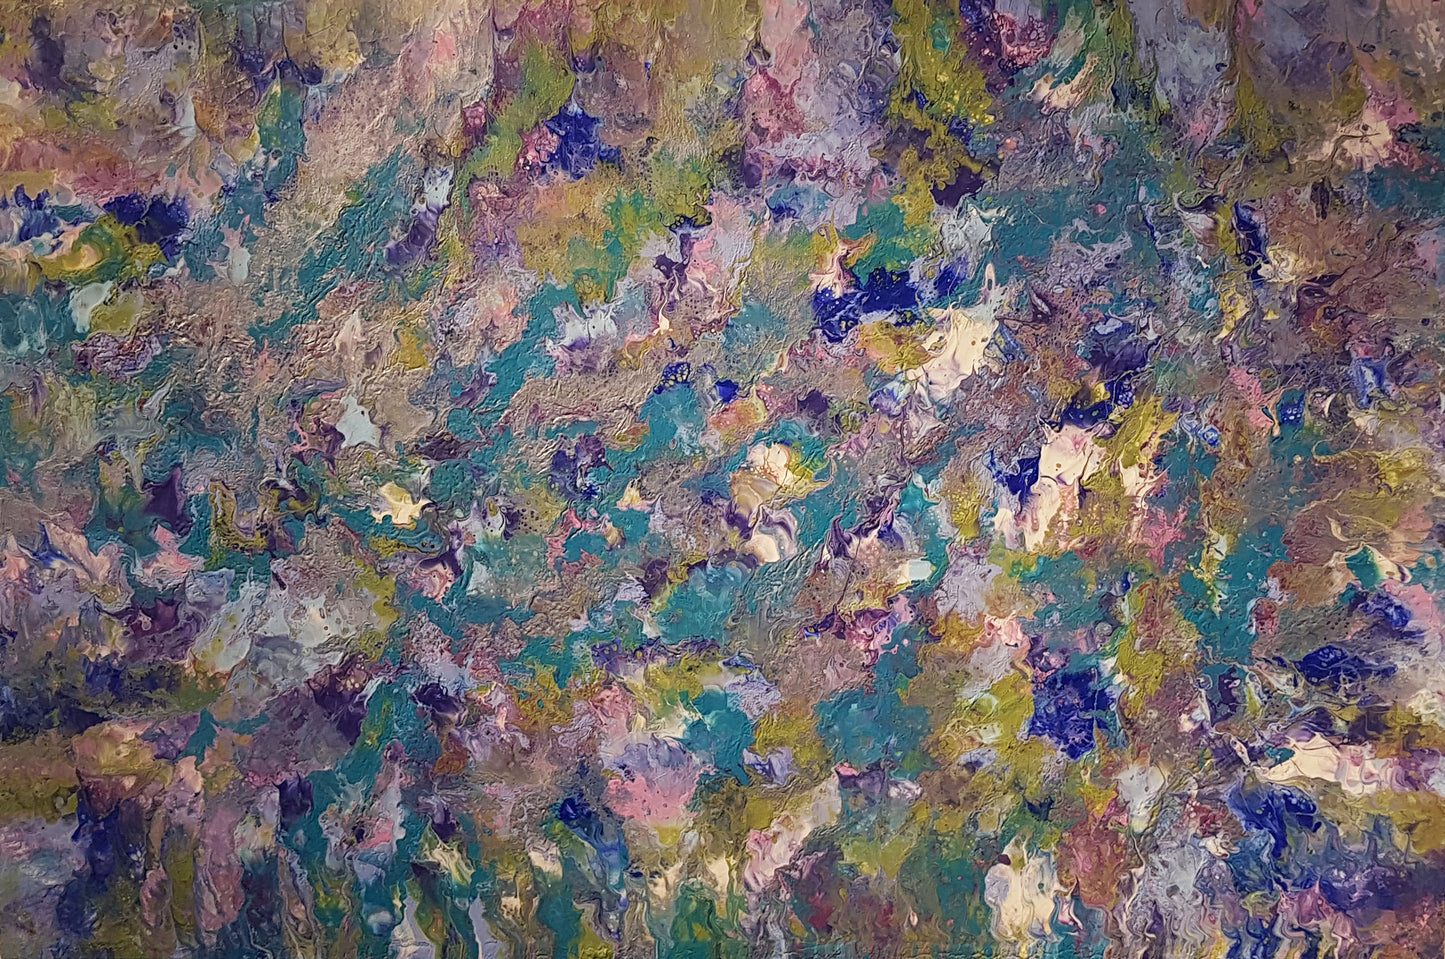 Poseidon's-Garden-by-Alexandra-Romano-Buy-Art-Online-Turquoise-Teal-Silver-Purple-Abstract-Paintings-Gallery-Toronto